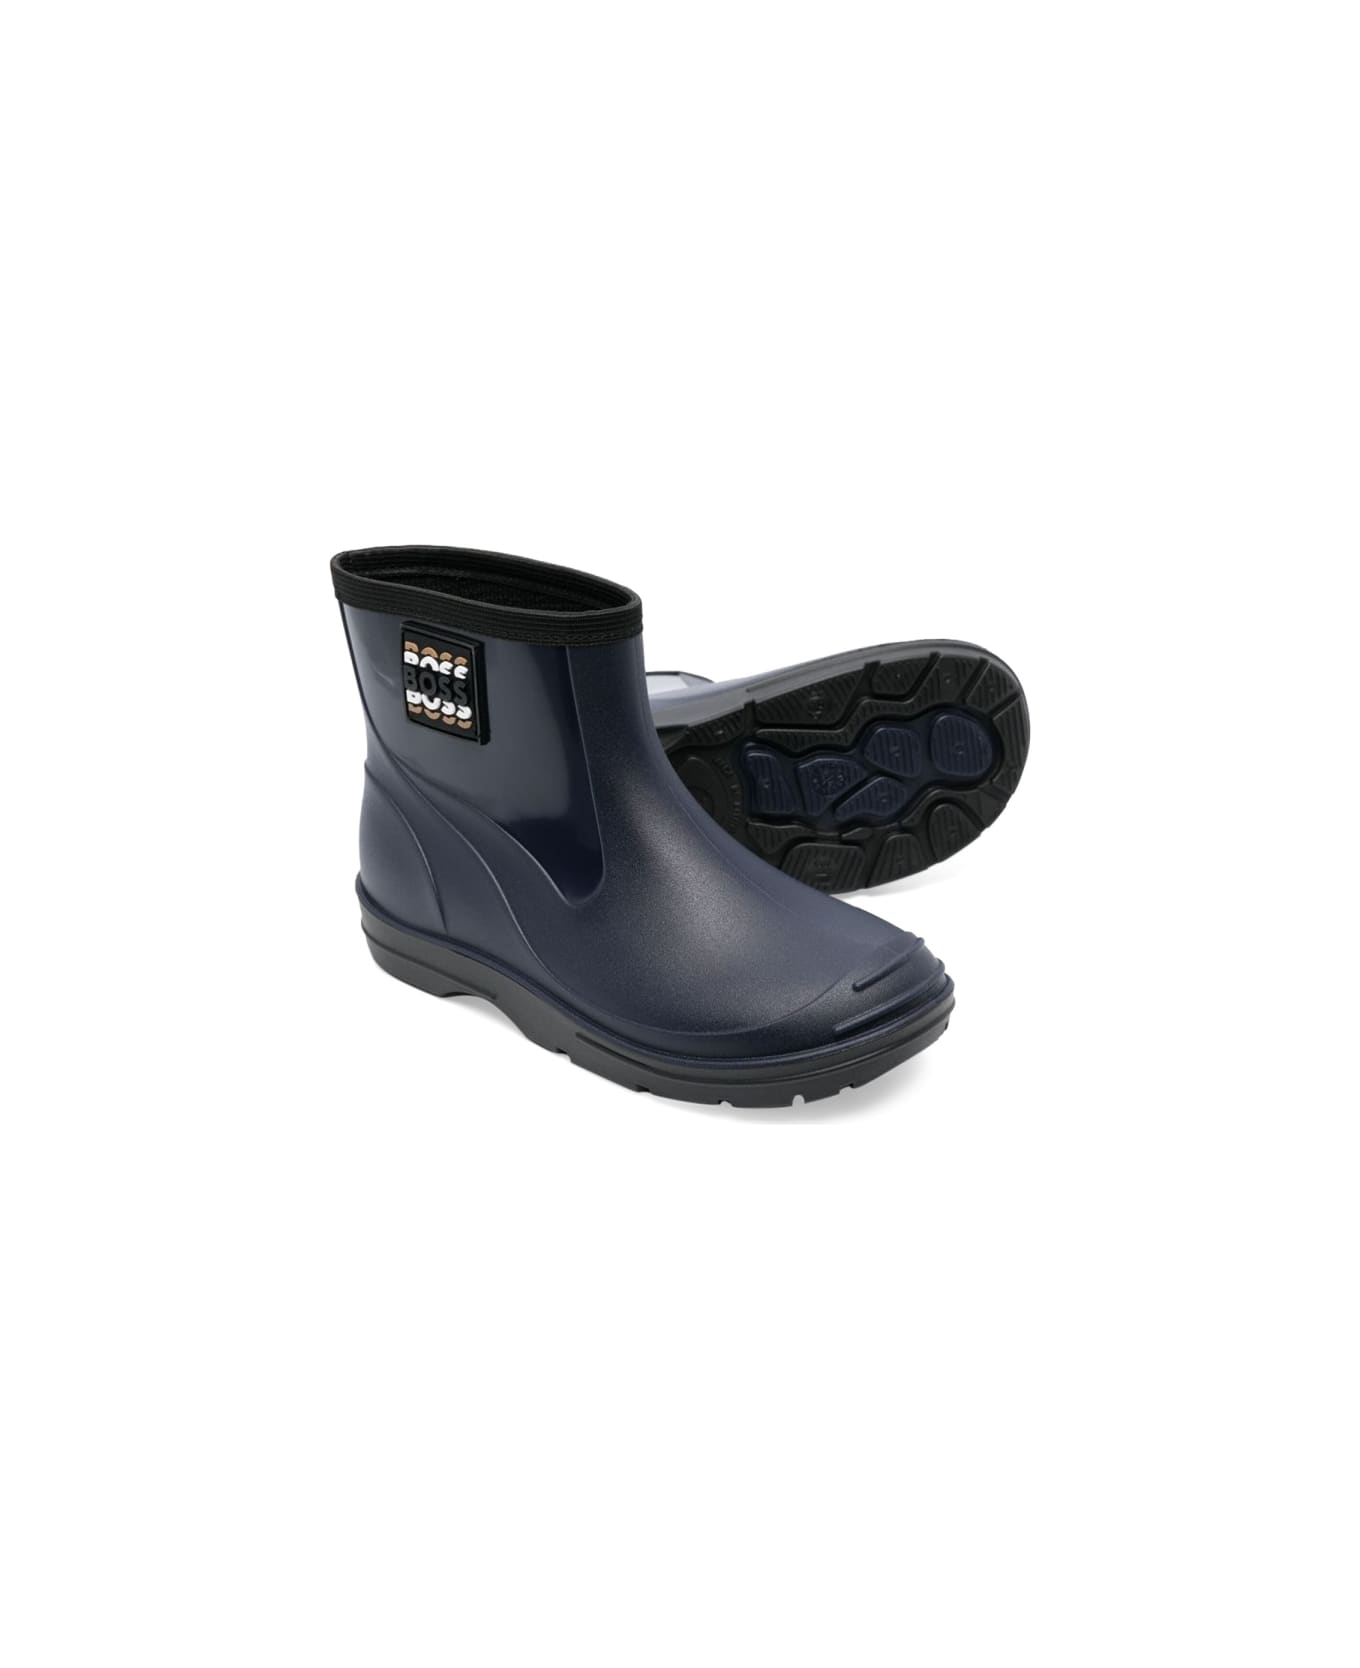 Hugo Boss Rain Boots - BLUE